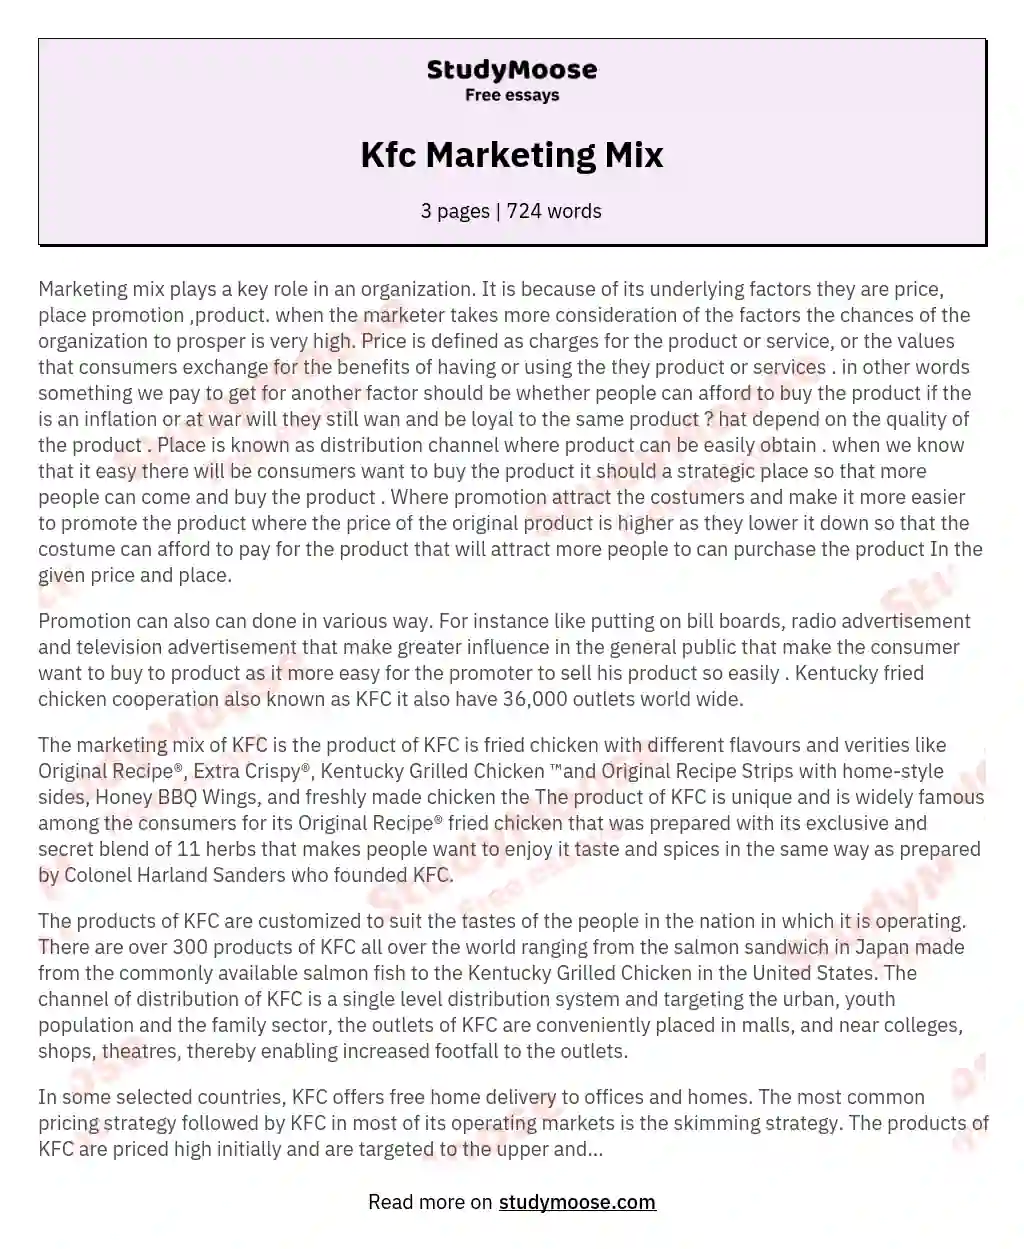 Kfc Marketing Mix essay